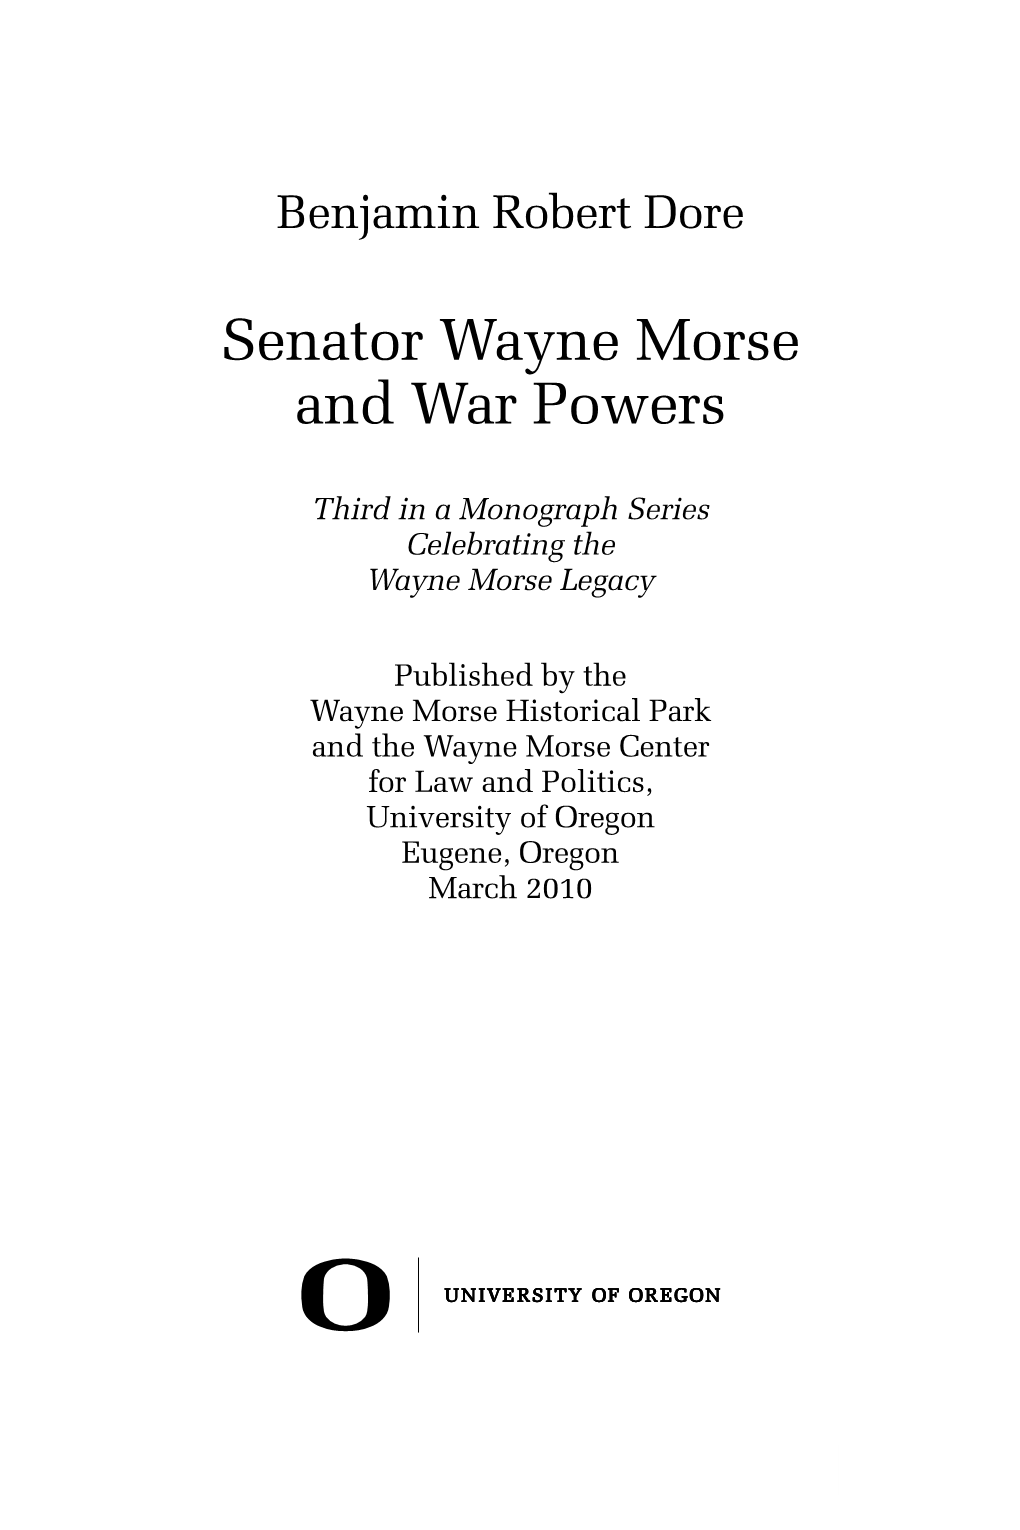 Senator Wayne Morse and War Powers